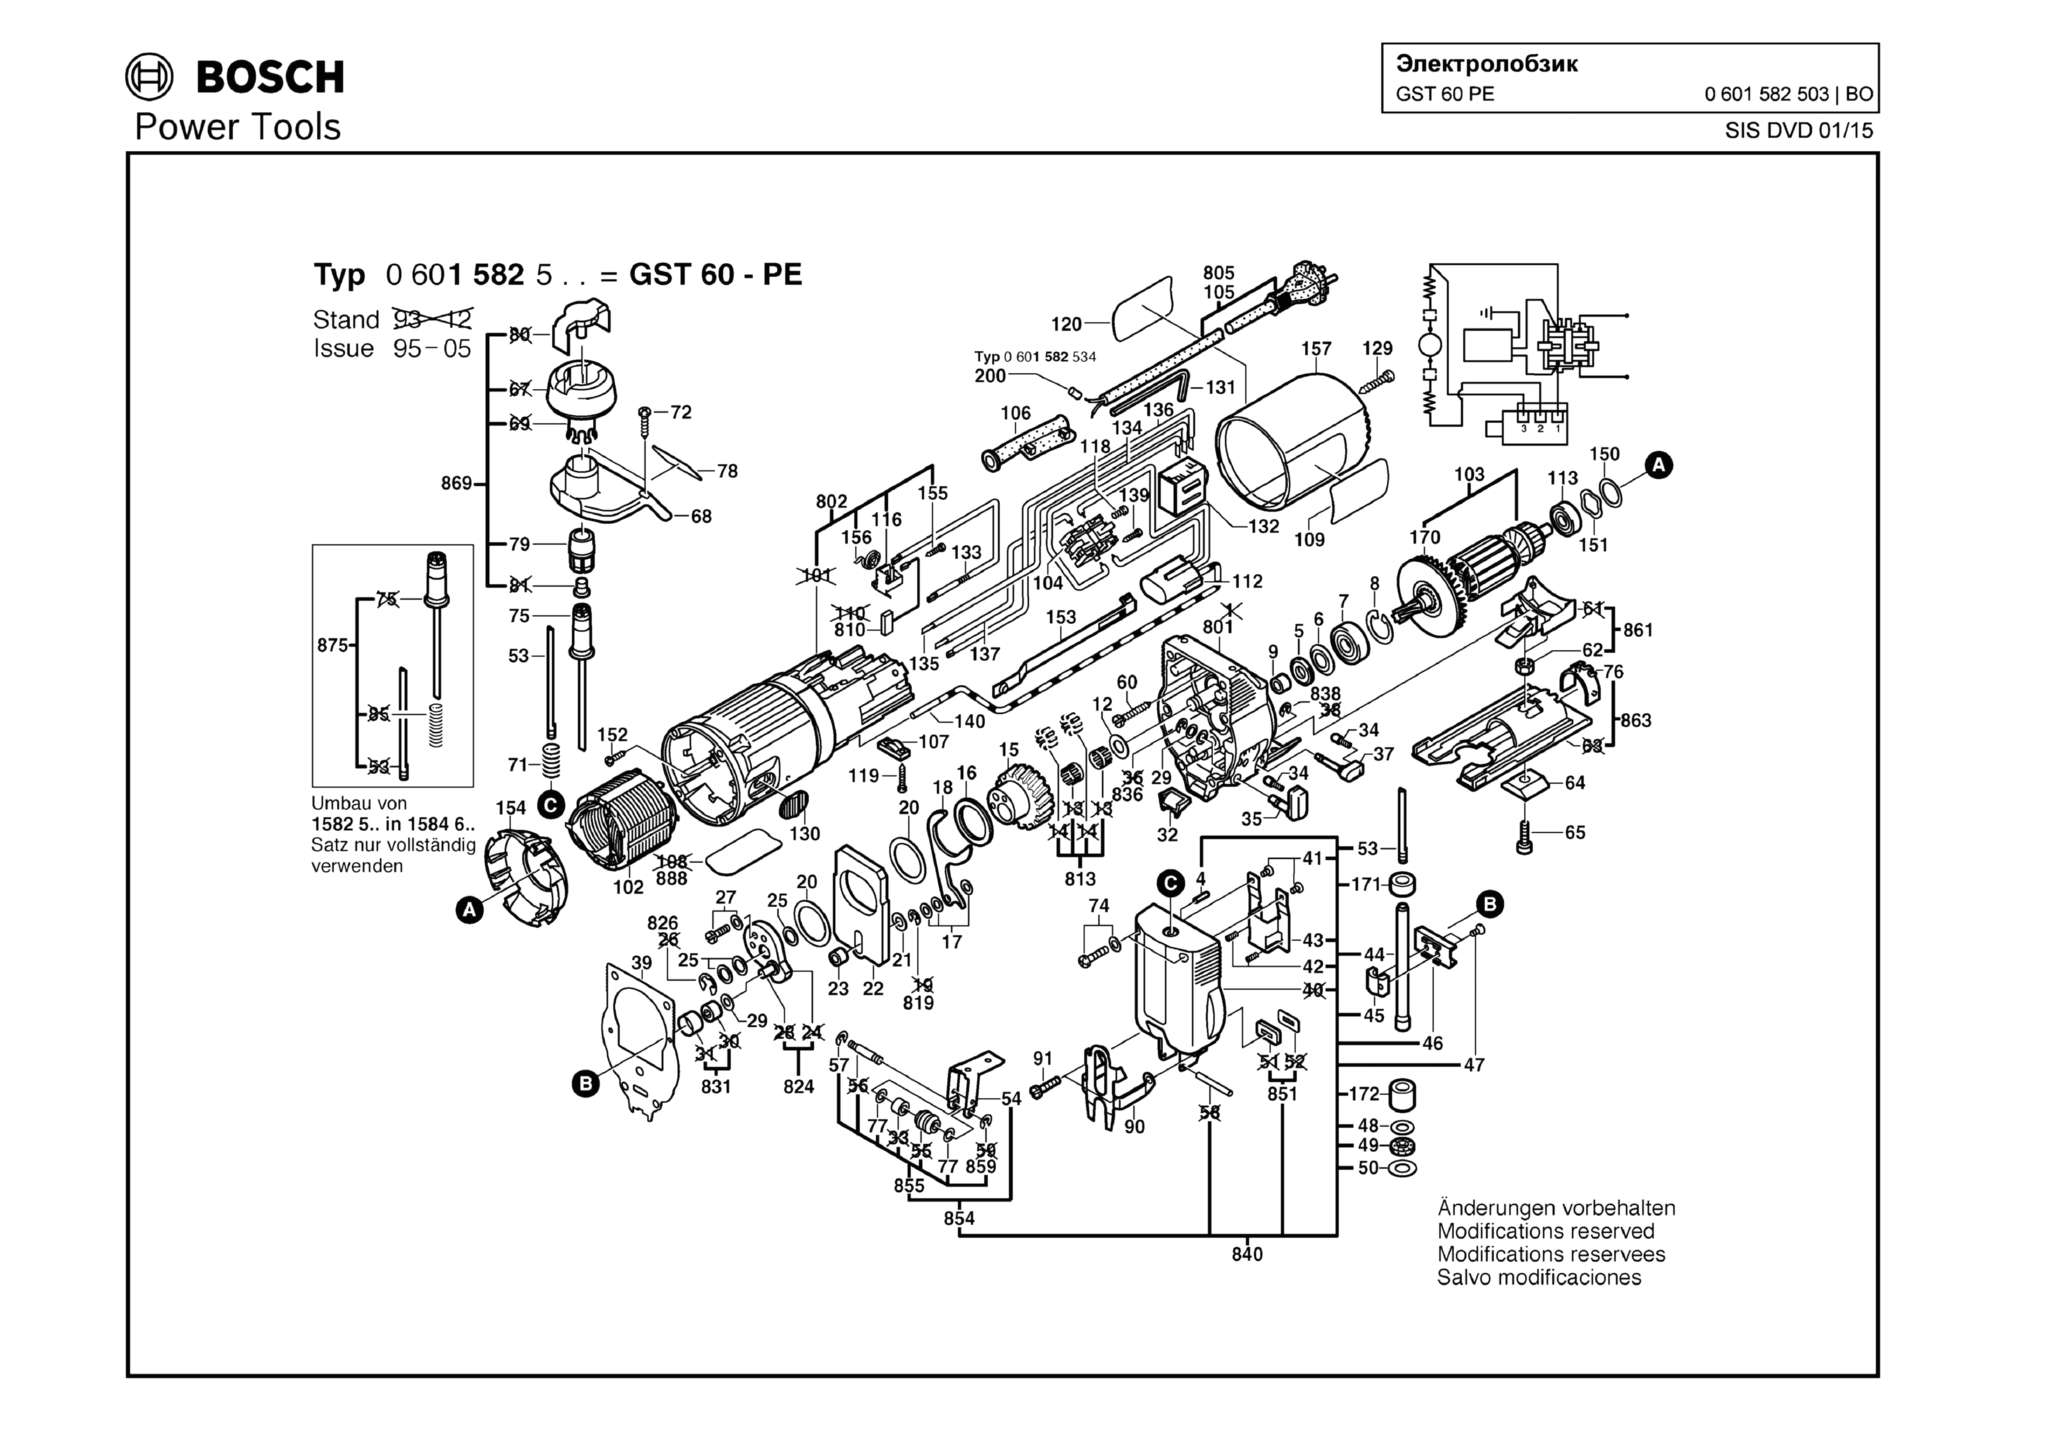 Запчасти, схема и деталировка Bosch GST 60 PE (ТИП 0601582503)